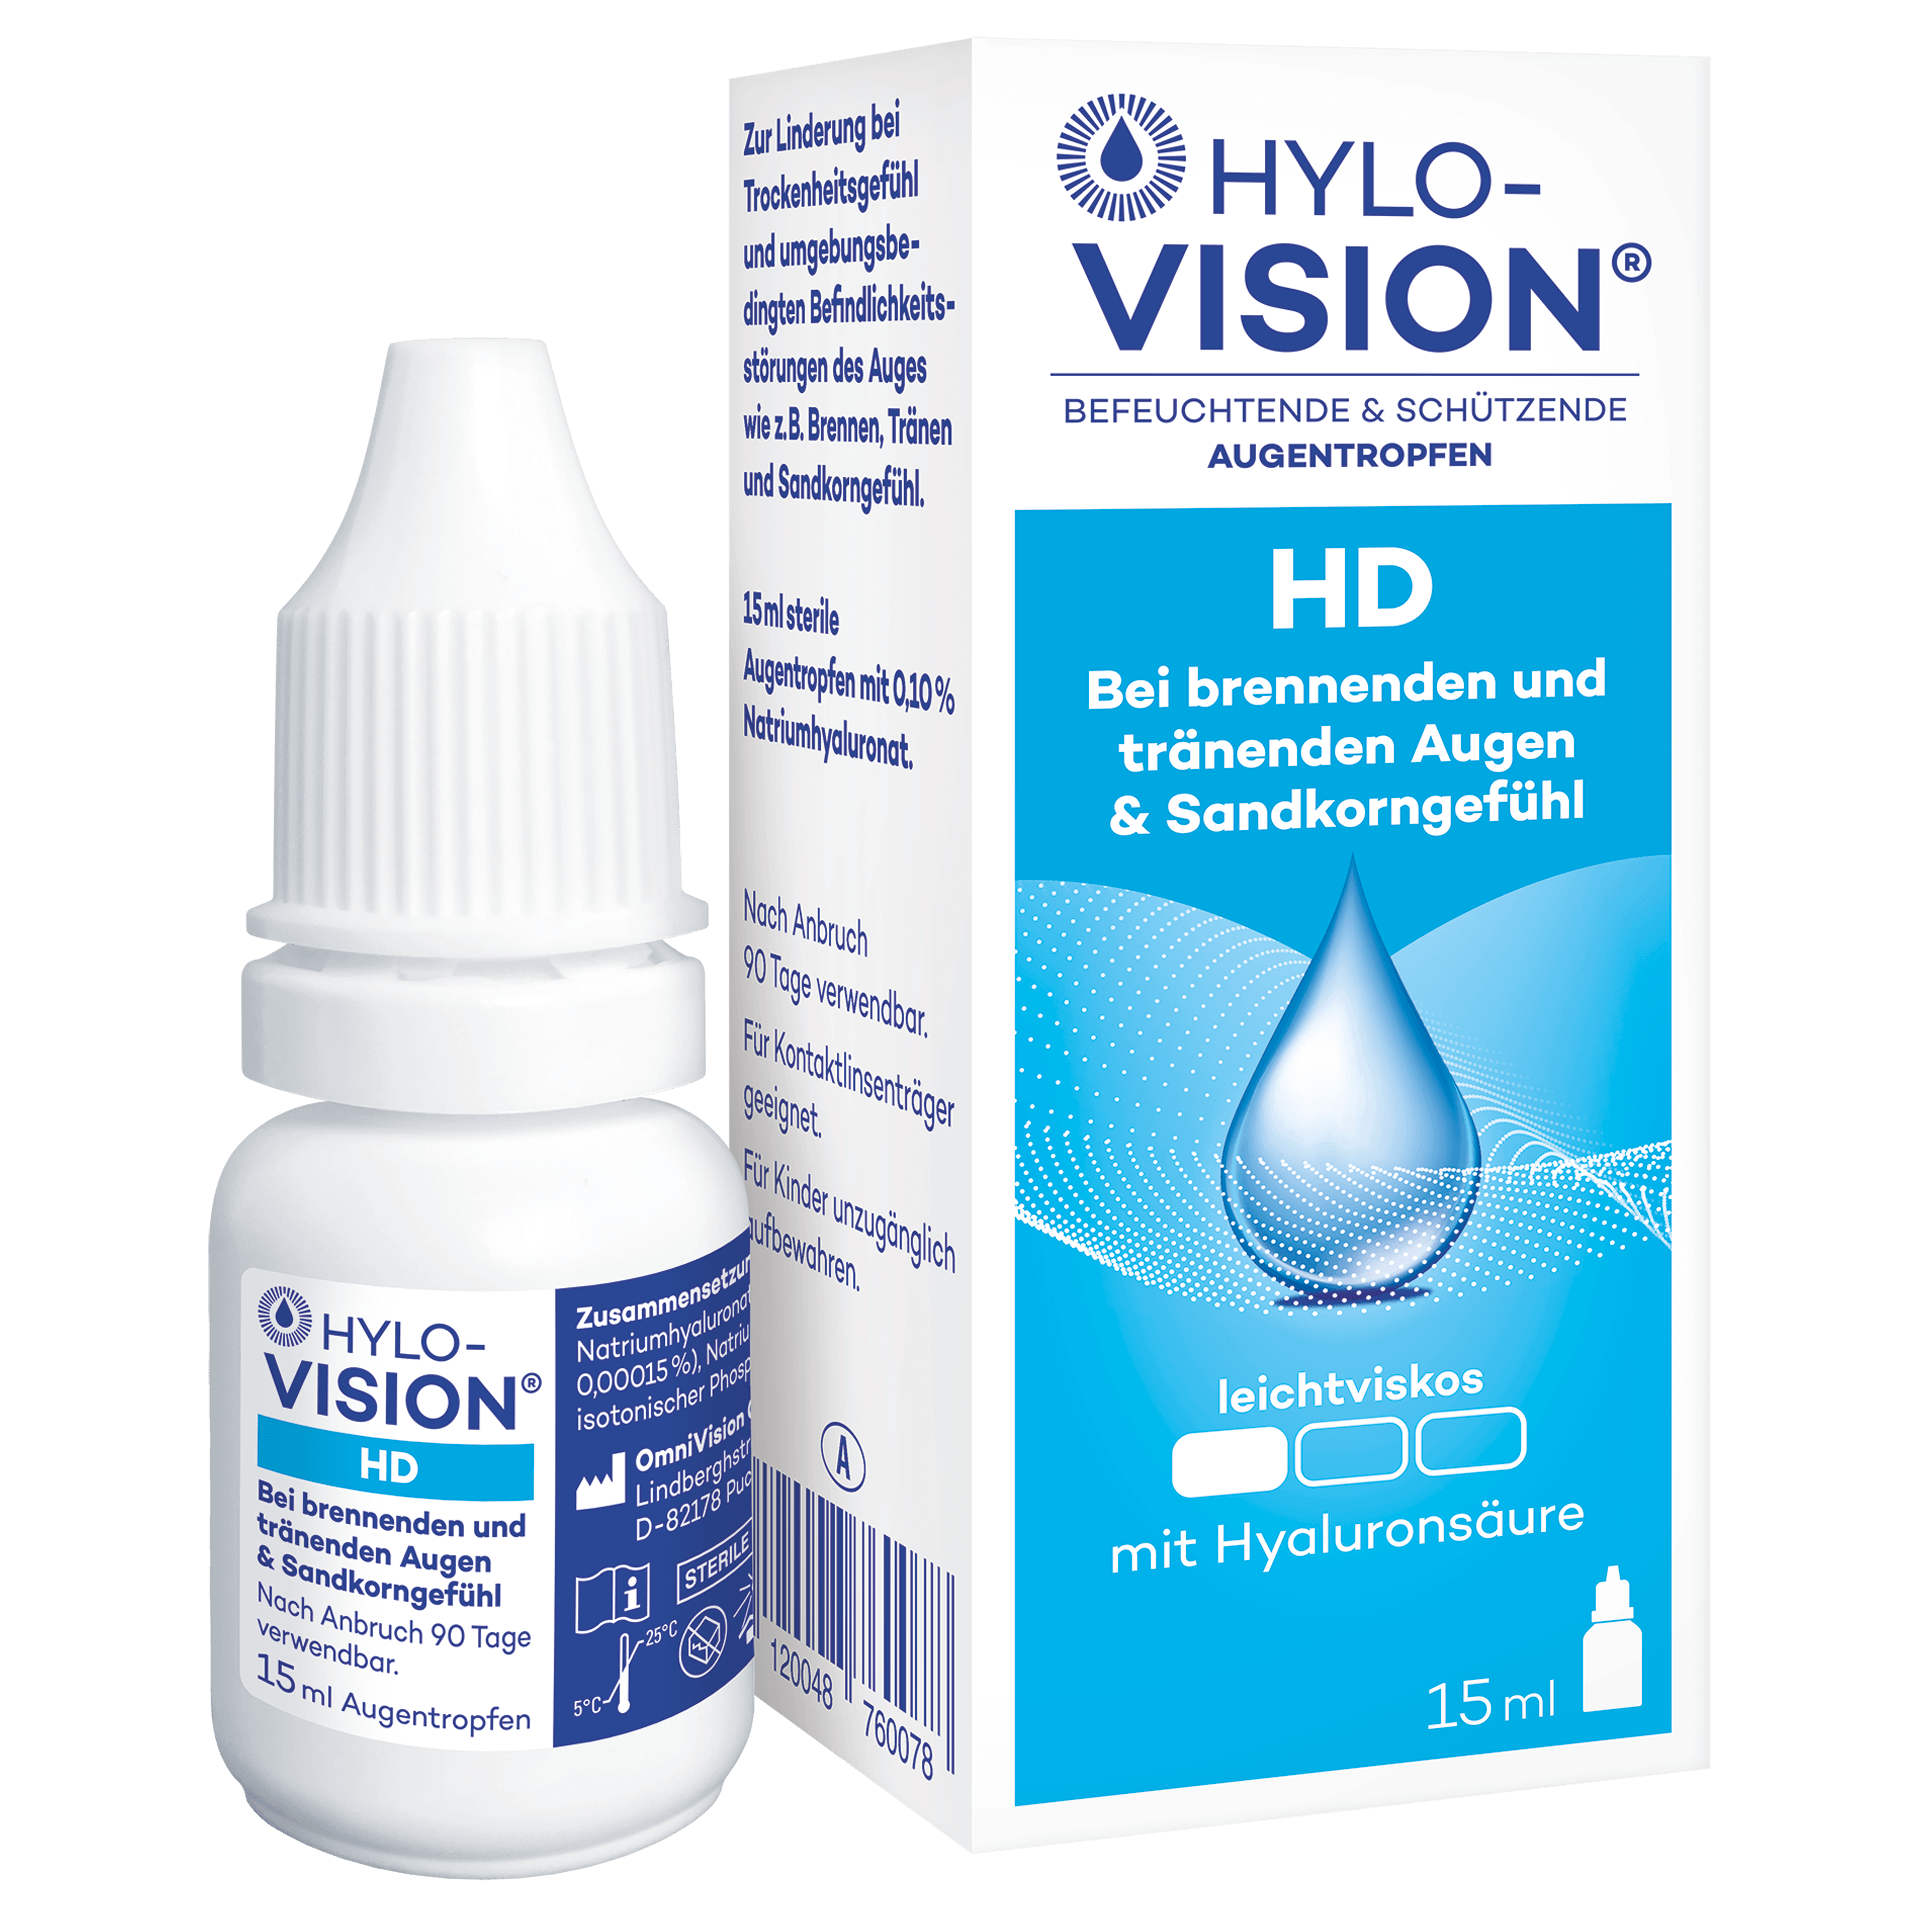 HYLO-VISION® HD